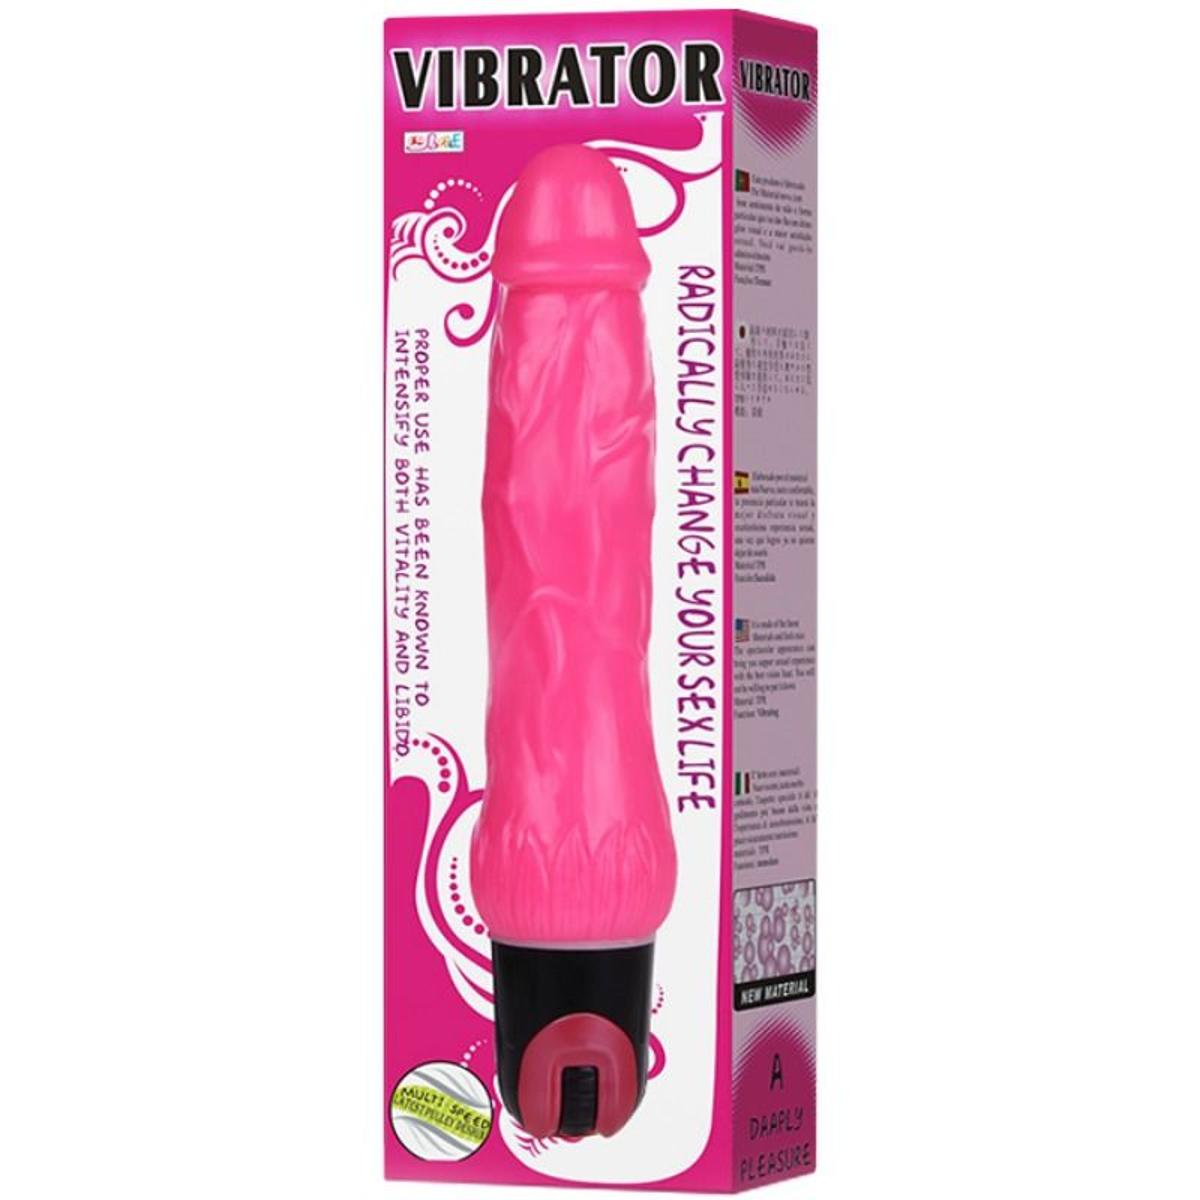 G-Punkt Vibrator "Daaply Pleasure" - OH MY! FANTASY